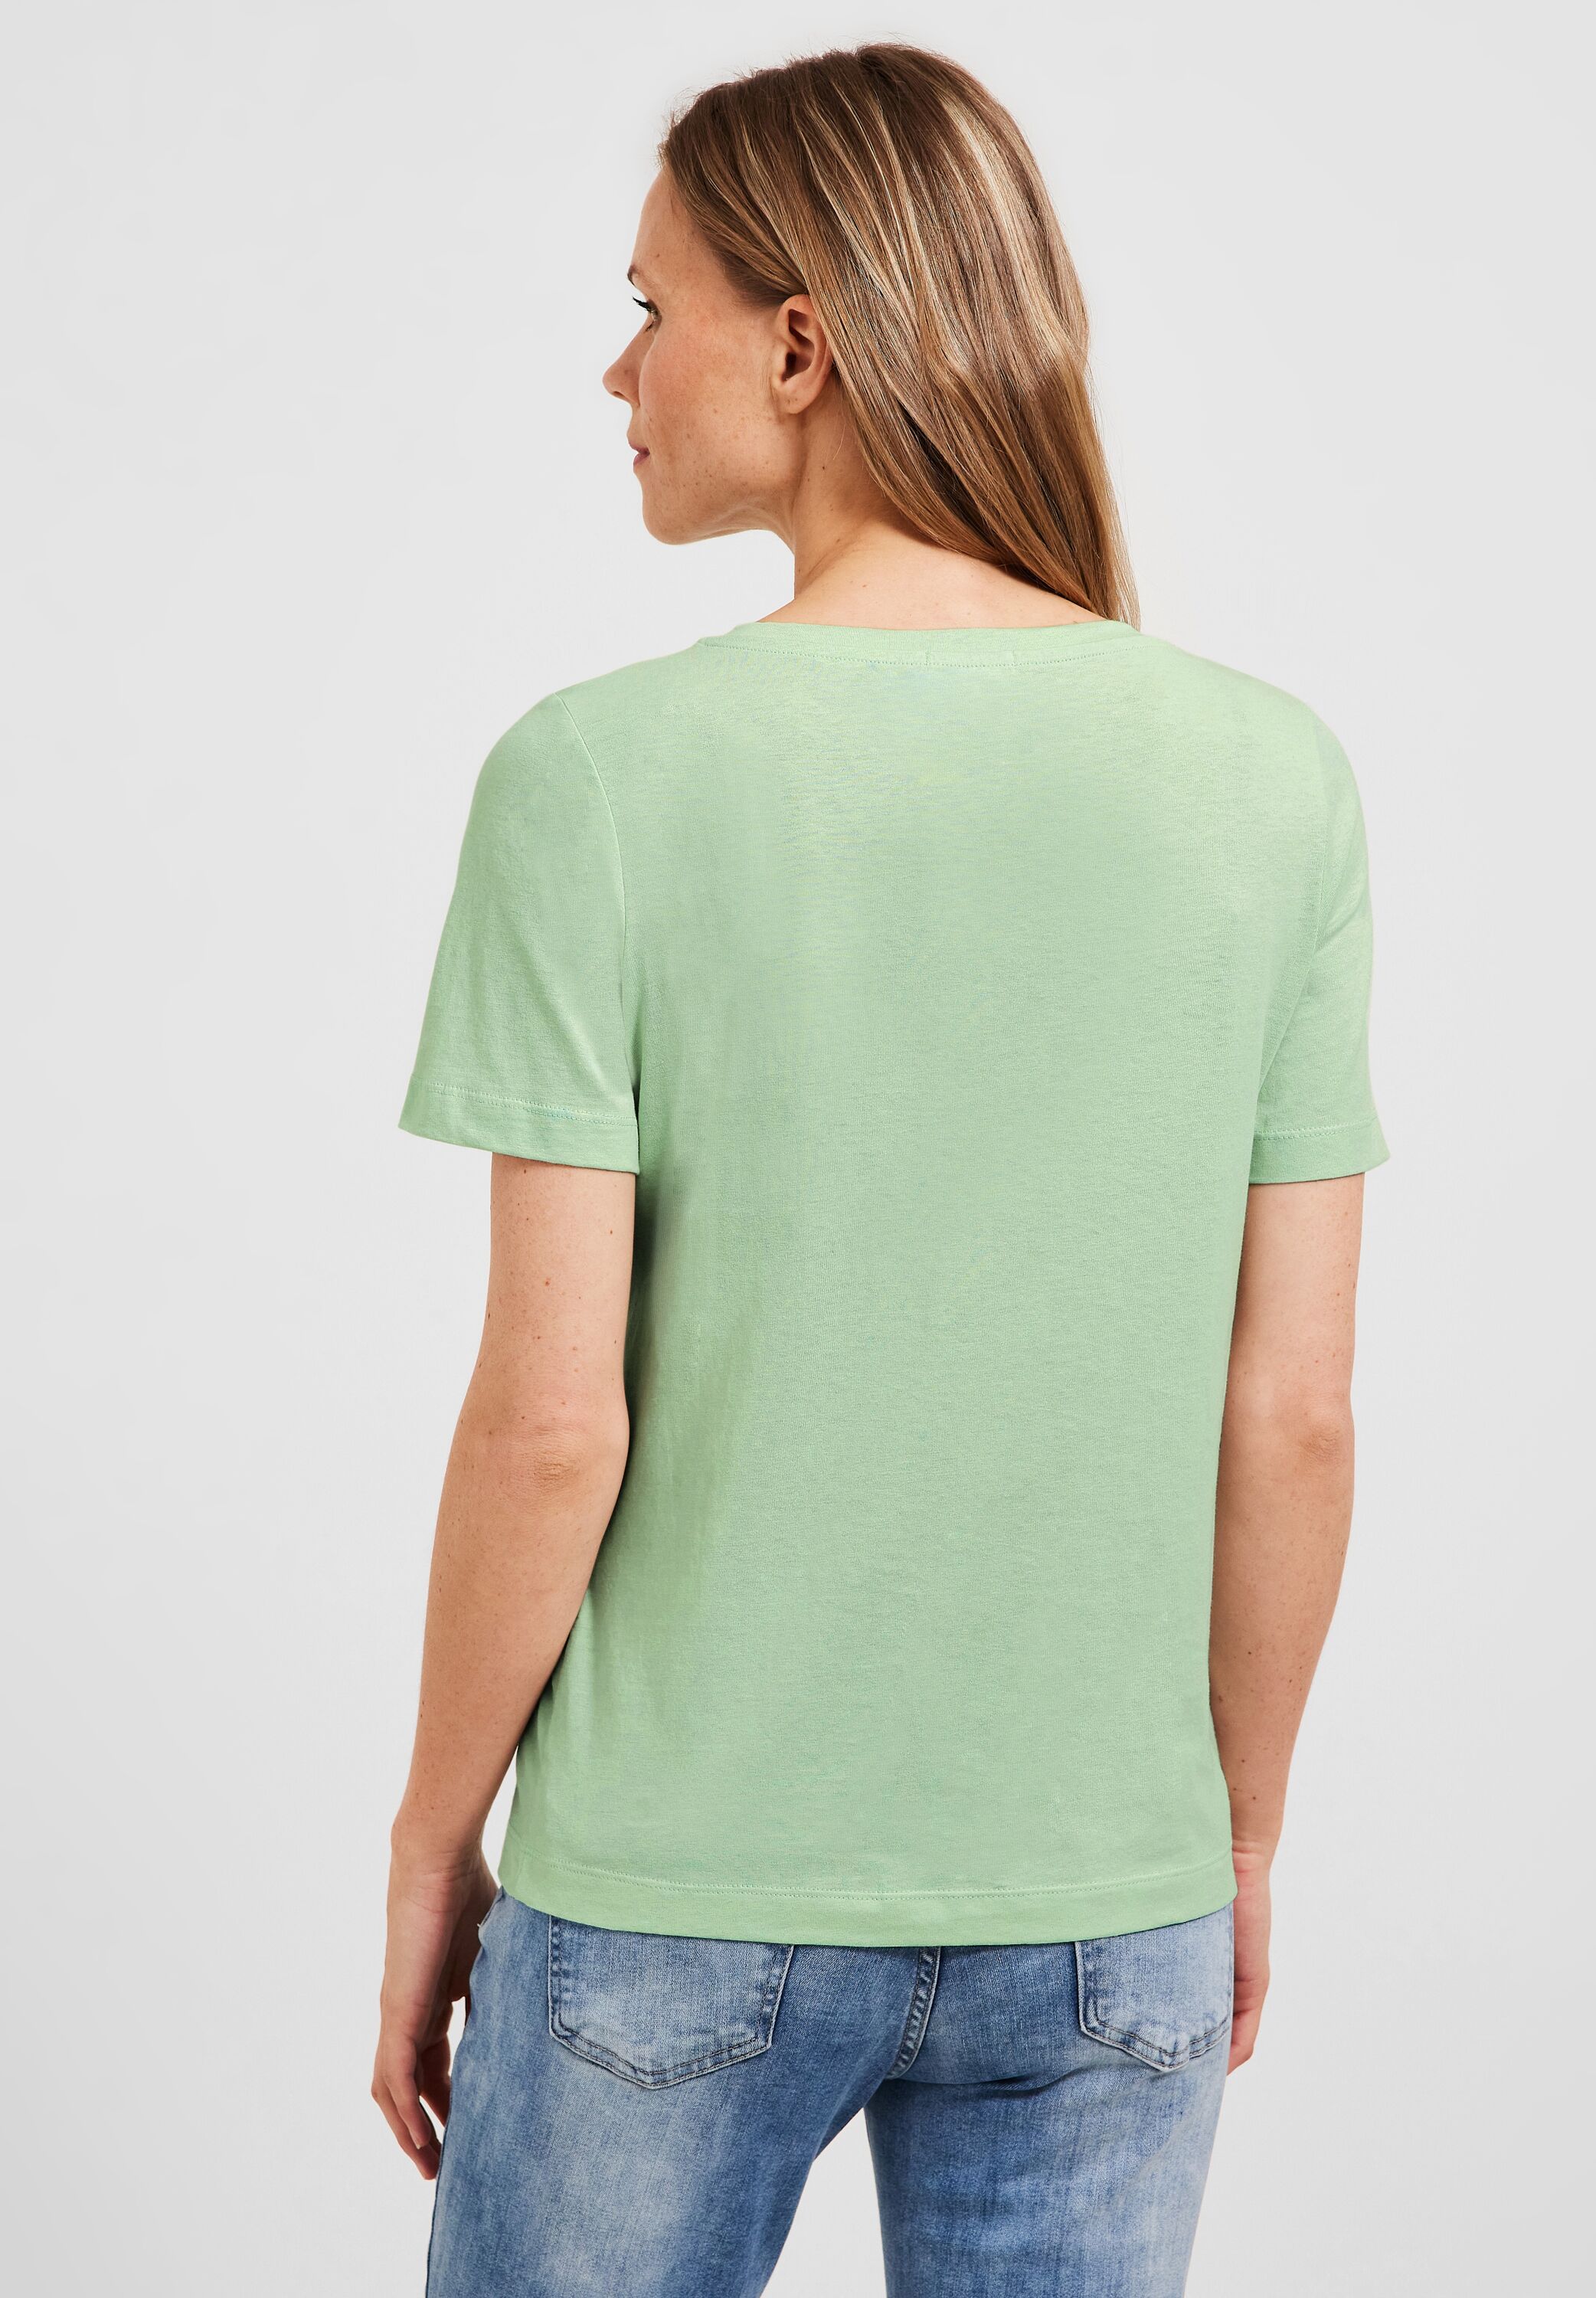 CONCEPT reduziert in - Salvia T-Shirt SALE Green im B320051-24851 Fresh Mode CECIL